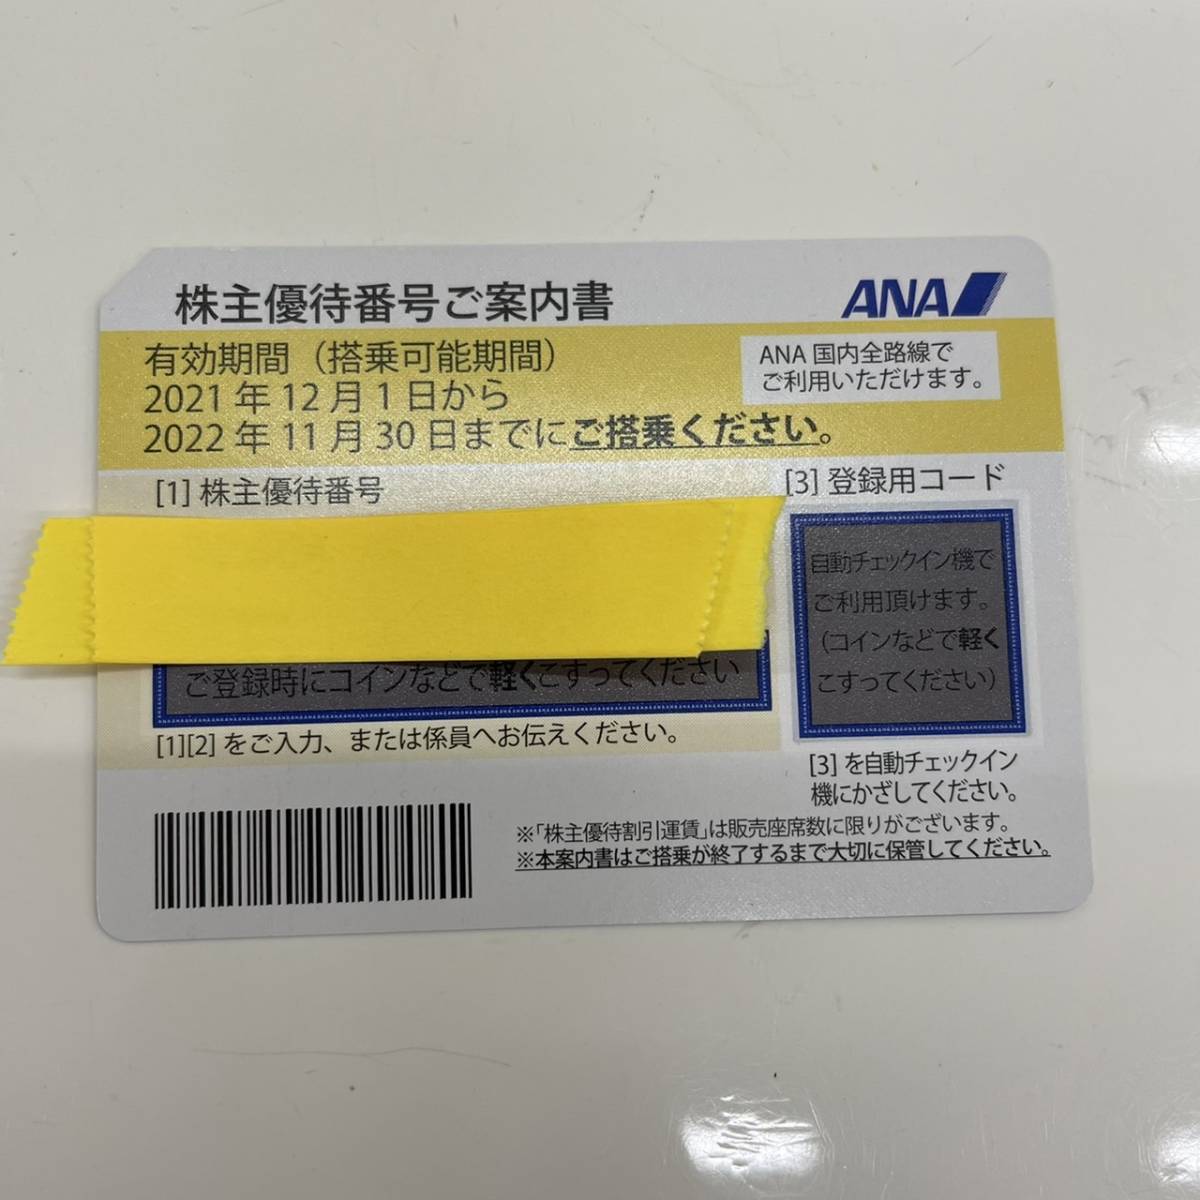 【No854】ANA株主優待券 1枚 有効期限2022.11.30まで_画像1